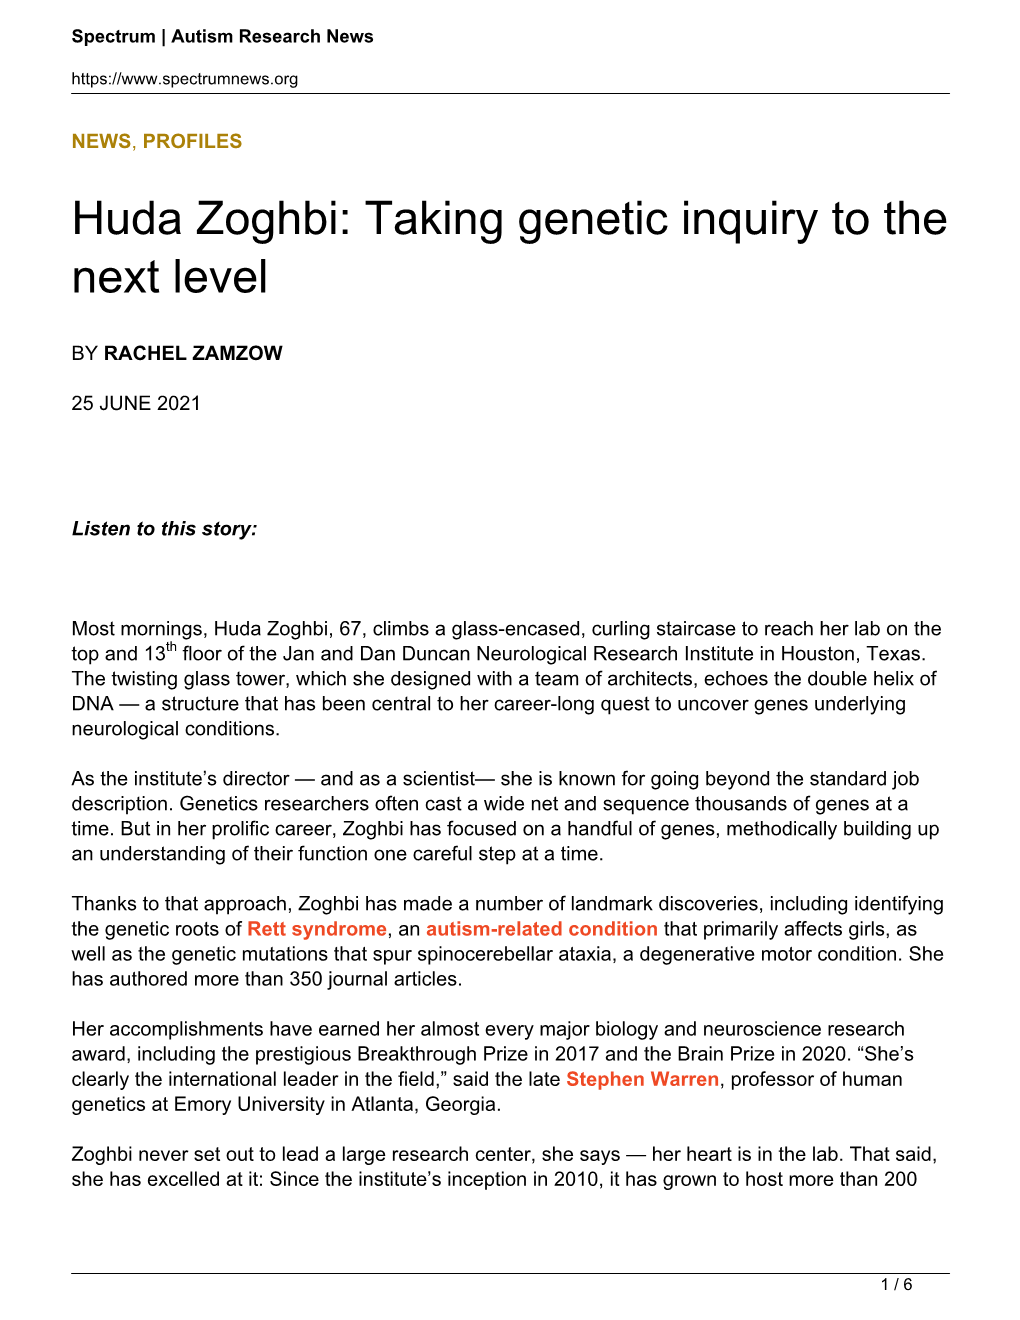 Huda Zoghbi: Taking Genetic Inquiry to the Next Level